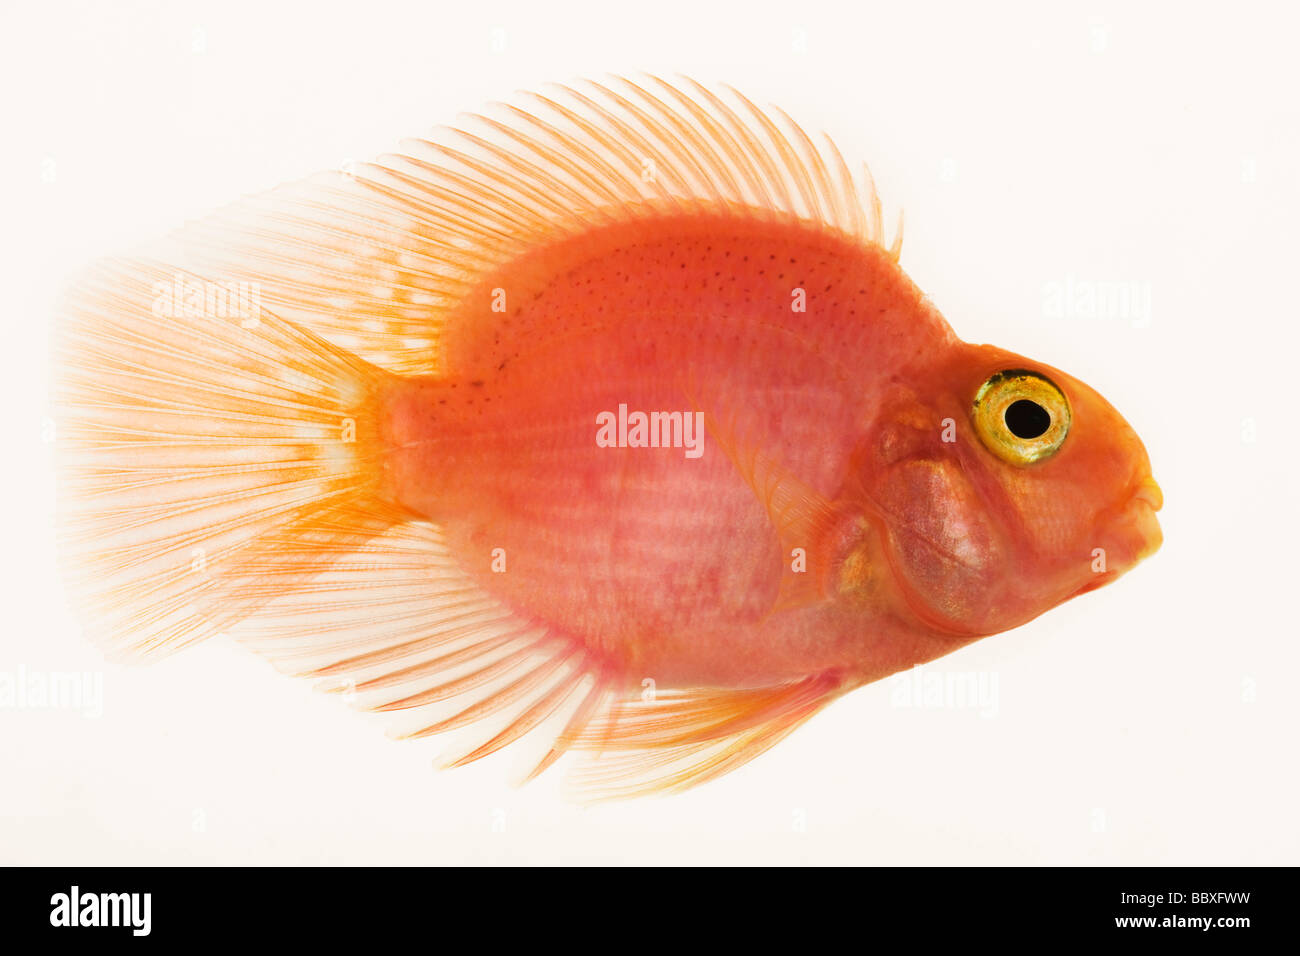 Red Parrot fish Studio shot against white background Stock Photo